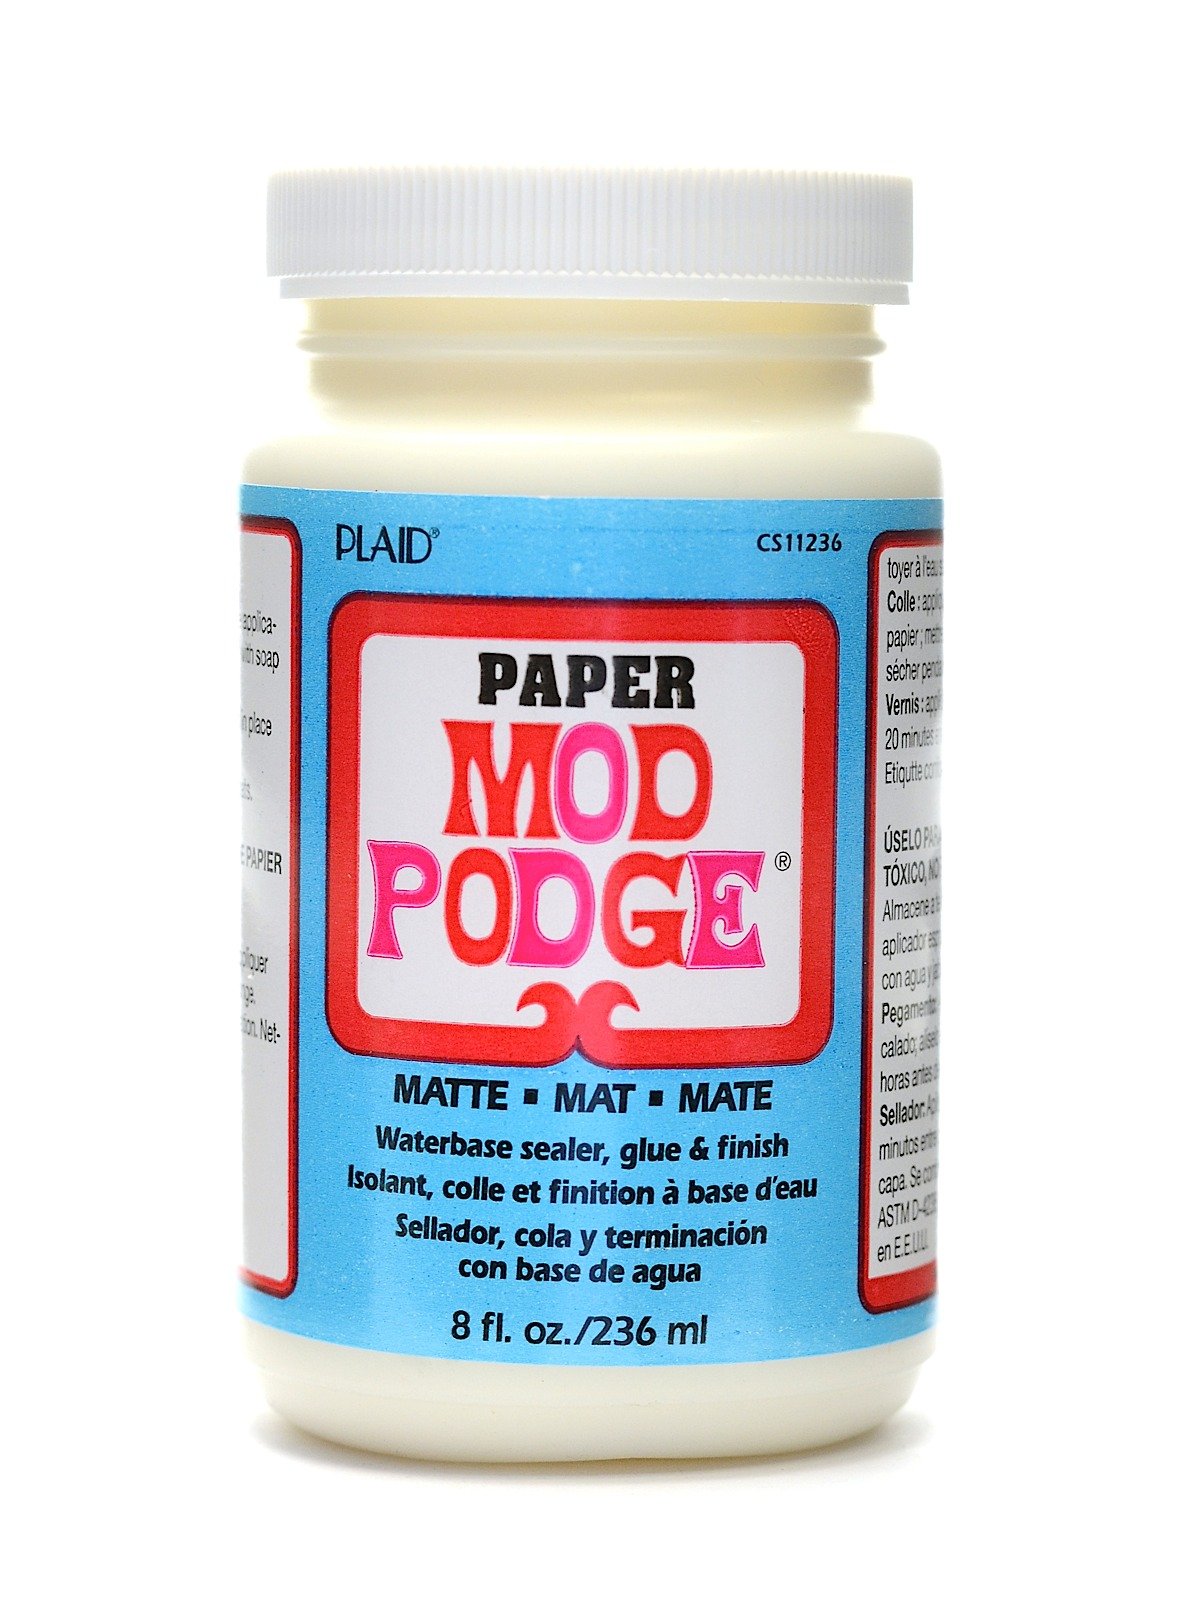 Mod Podge Photo Transfer Medium - 8 fl oz bottle